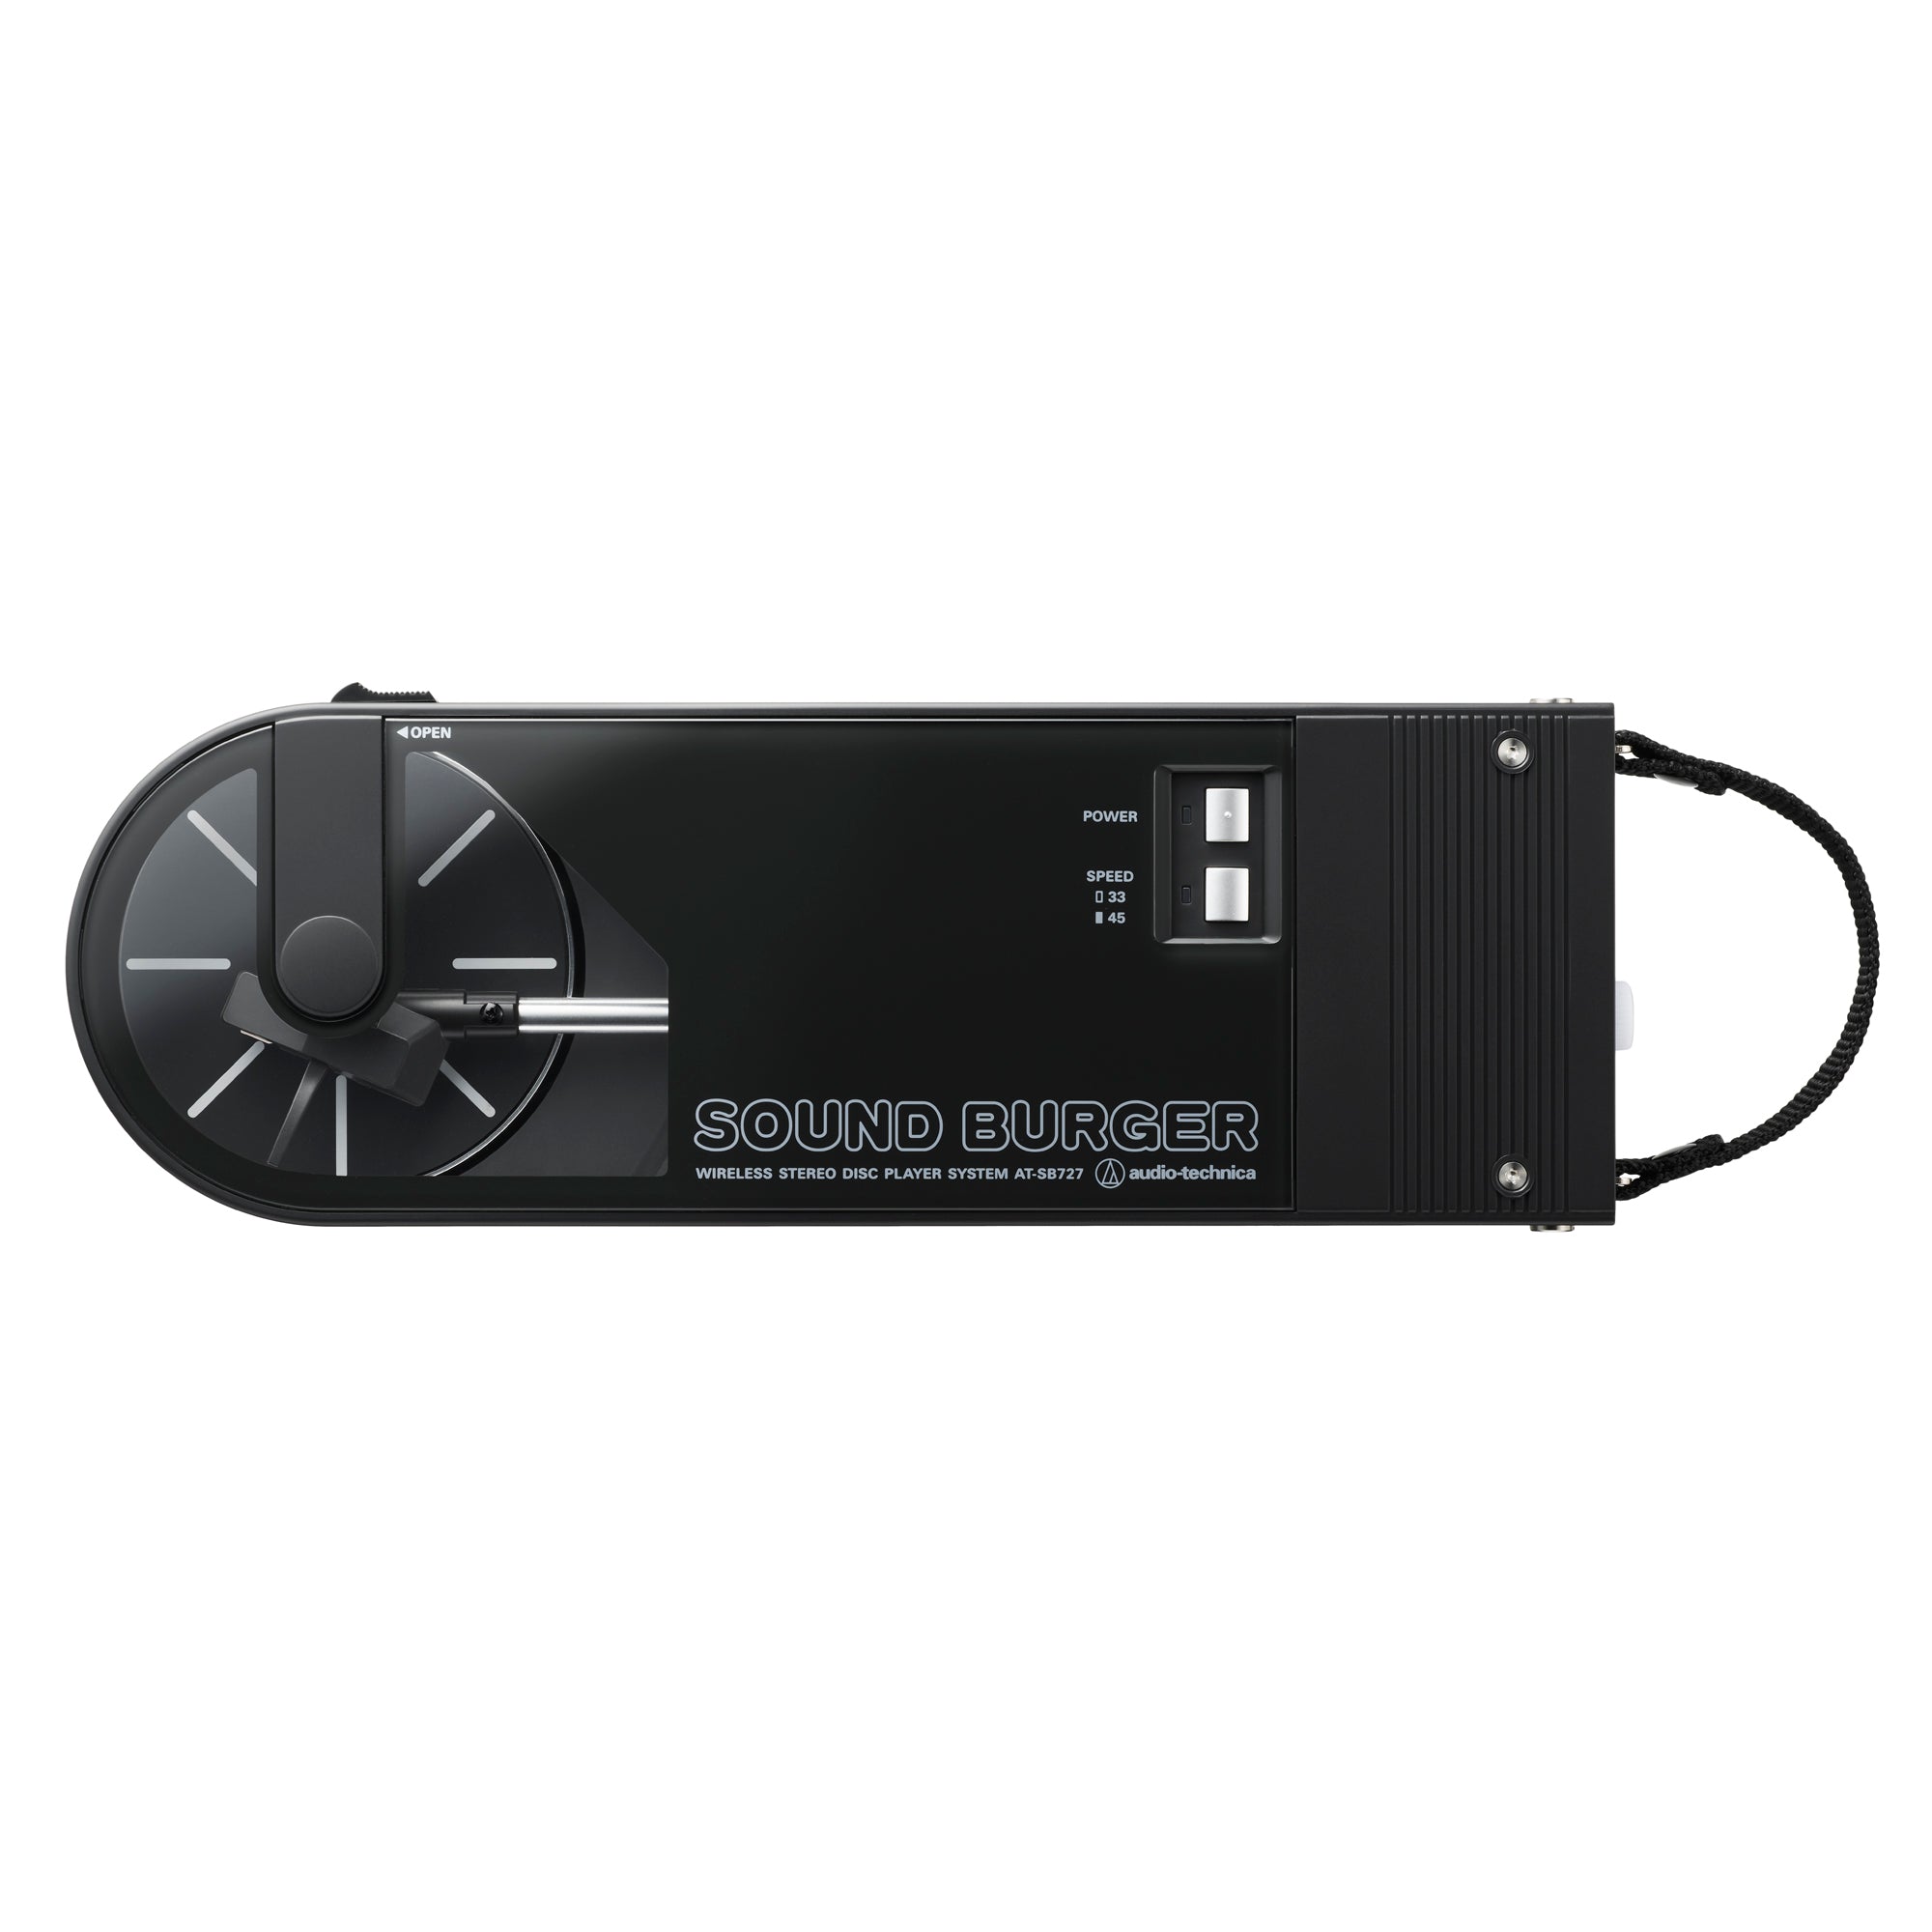 Audio Technica - AT-SB727 Sound Burger - Portable Bluetooth Turntable Australia